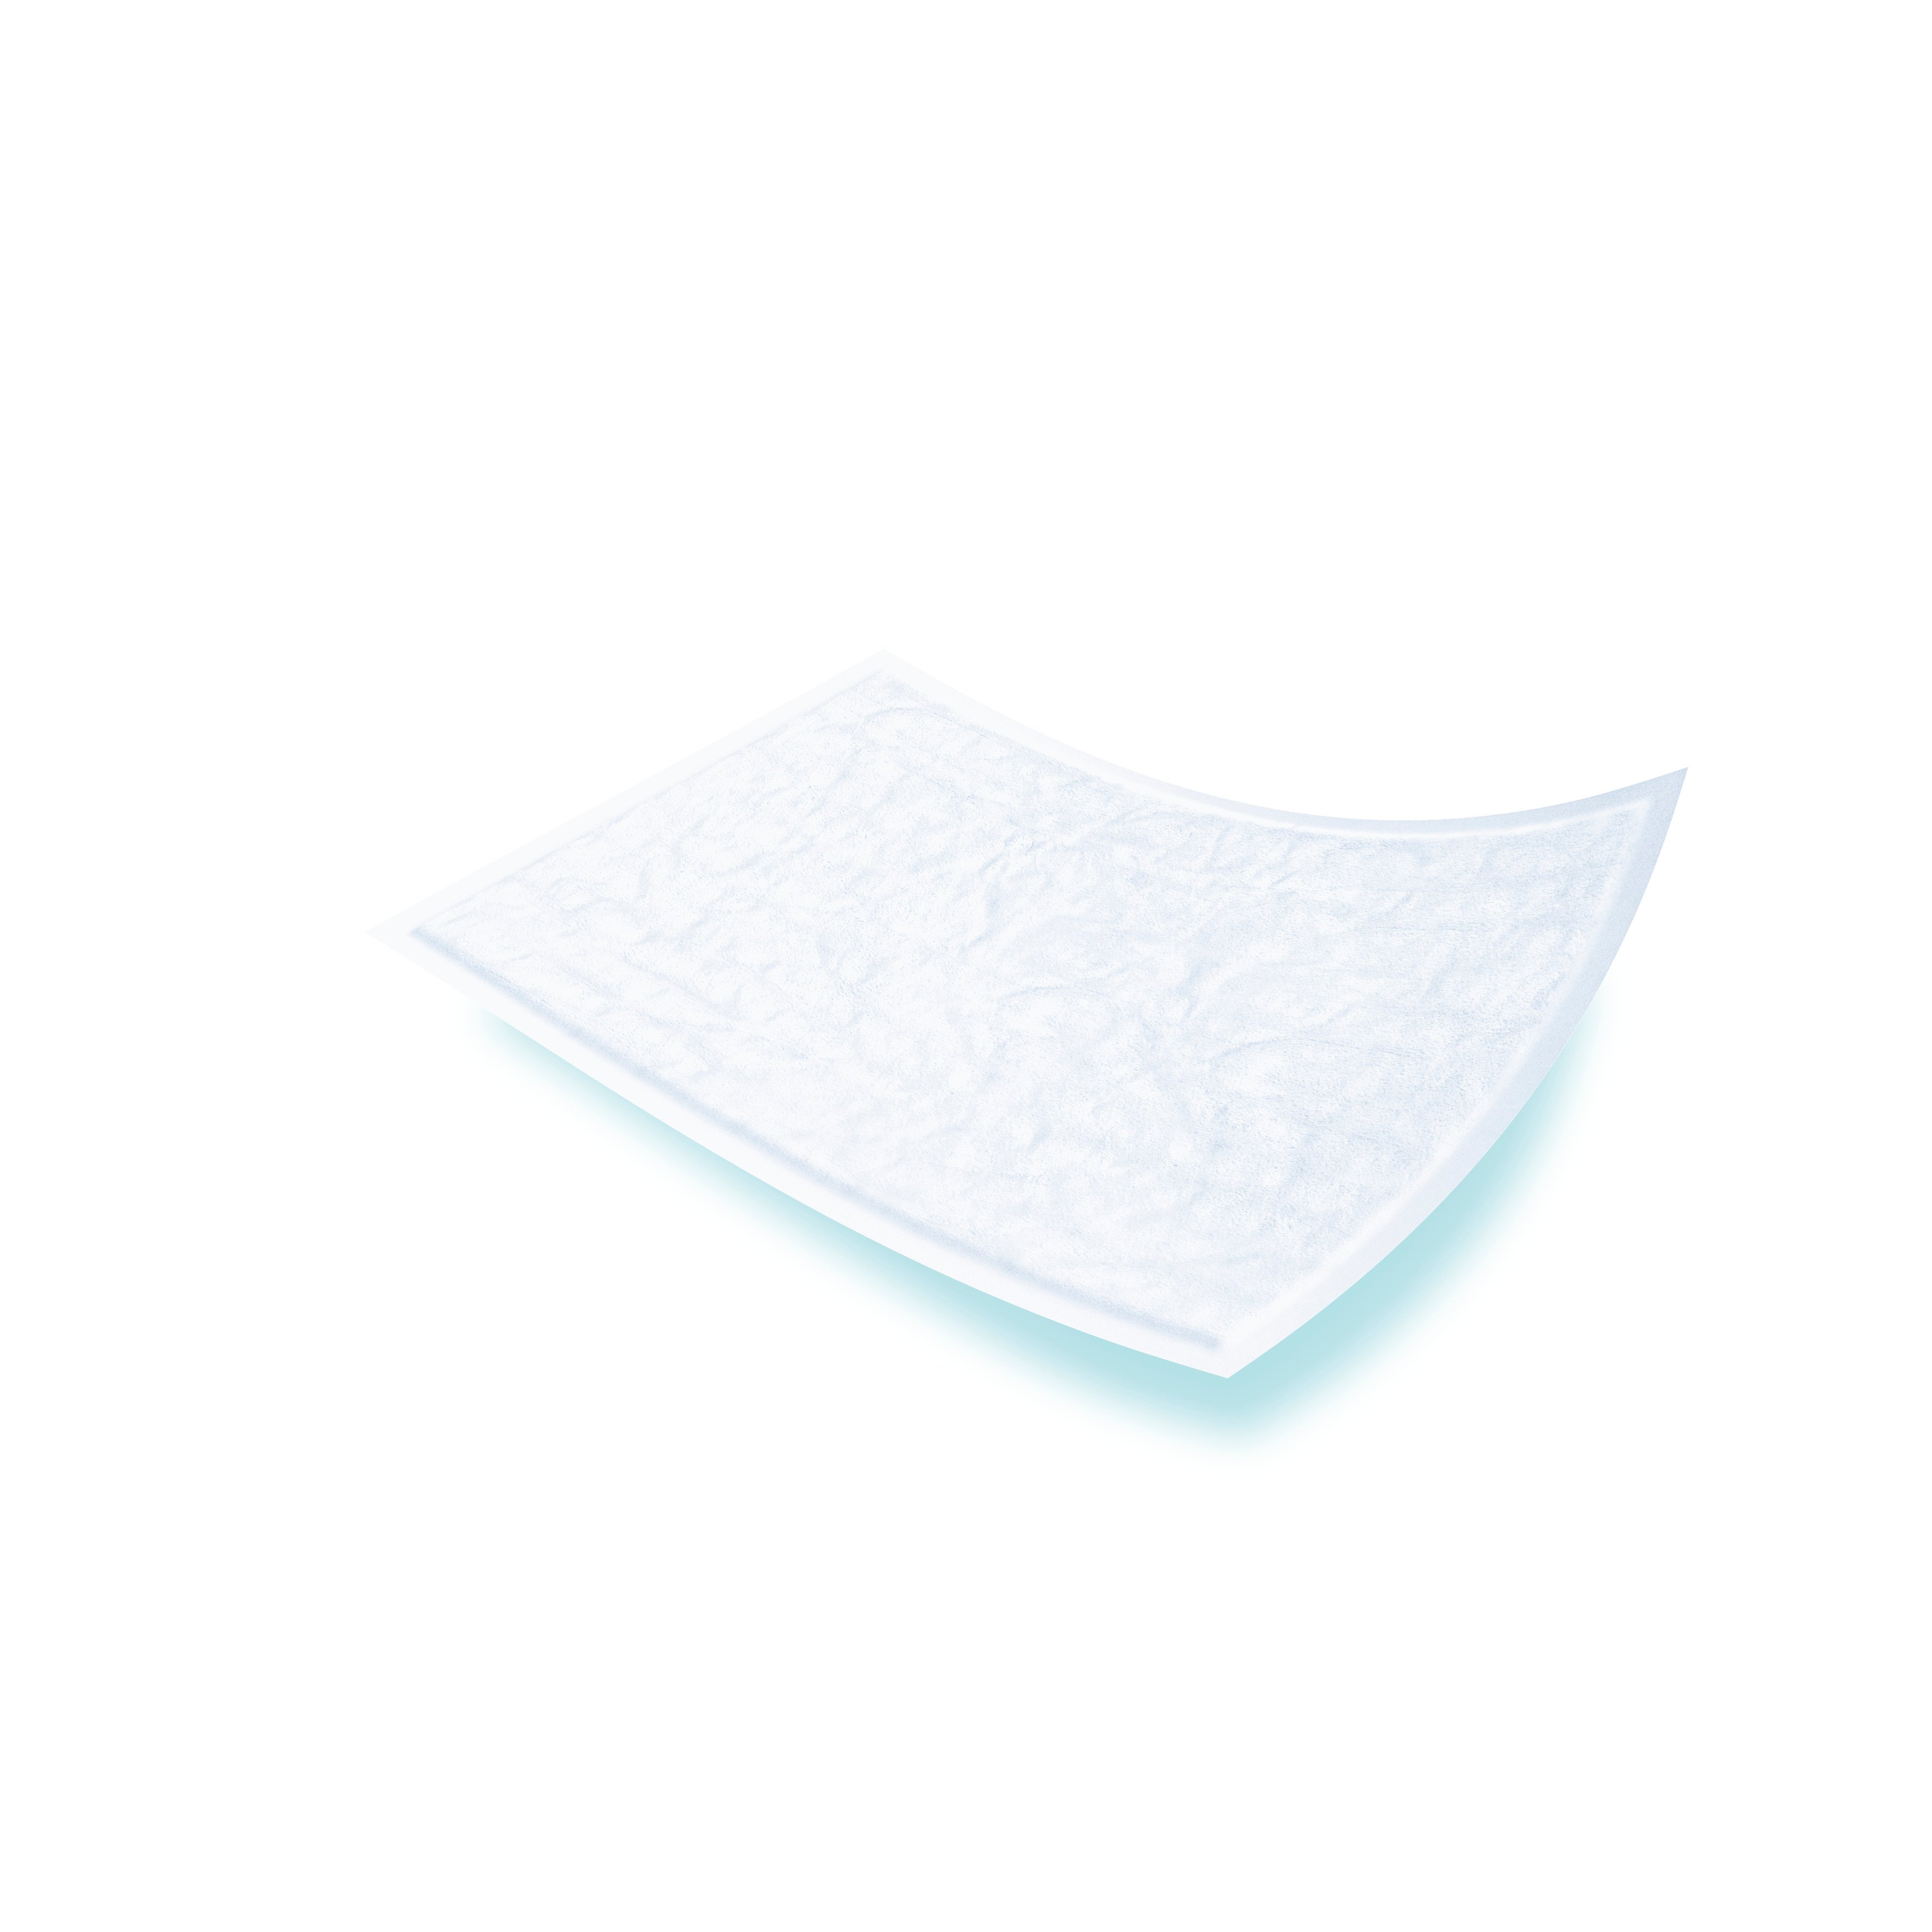 Одноразовые пеленки Tena Bed Normal, 90x60 см, 5 шт. - фото 3